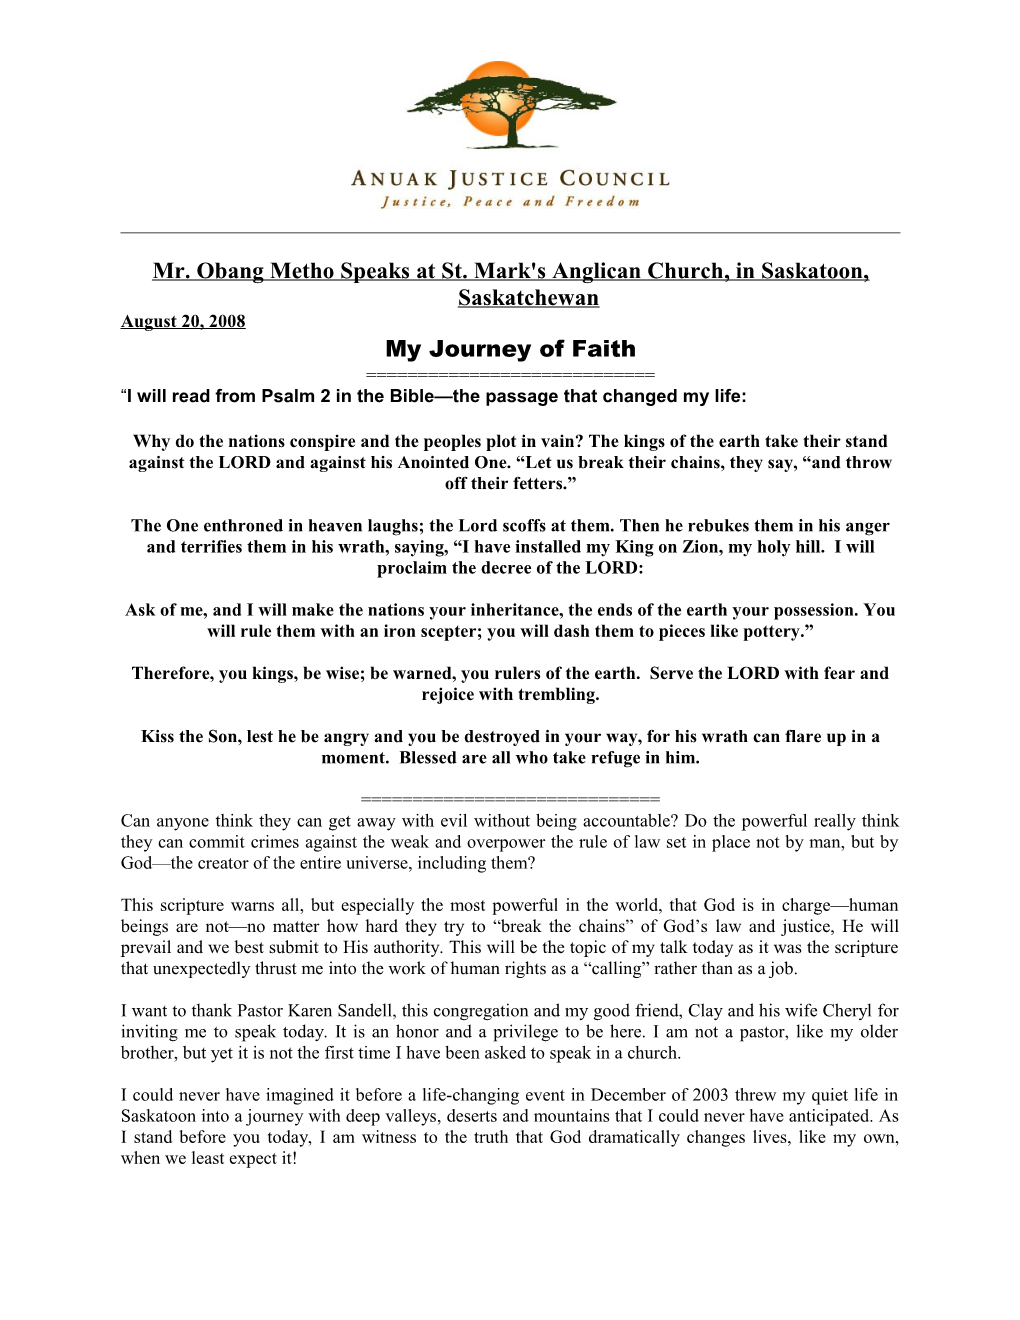 Mr. Obang Metho Speaks Atst. Mark's Anglican Church, in Saskatoon,Saskatchewan